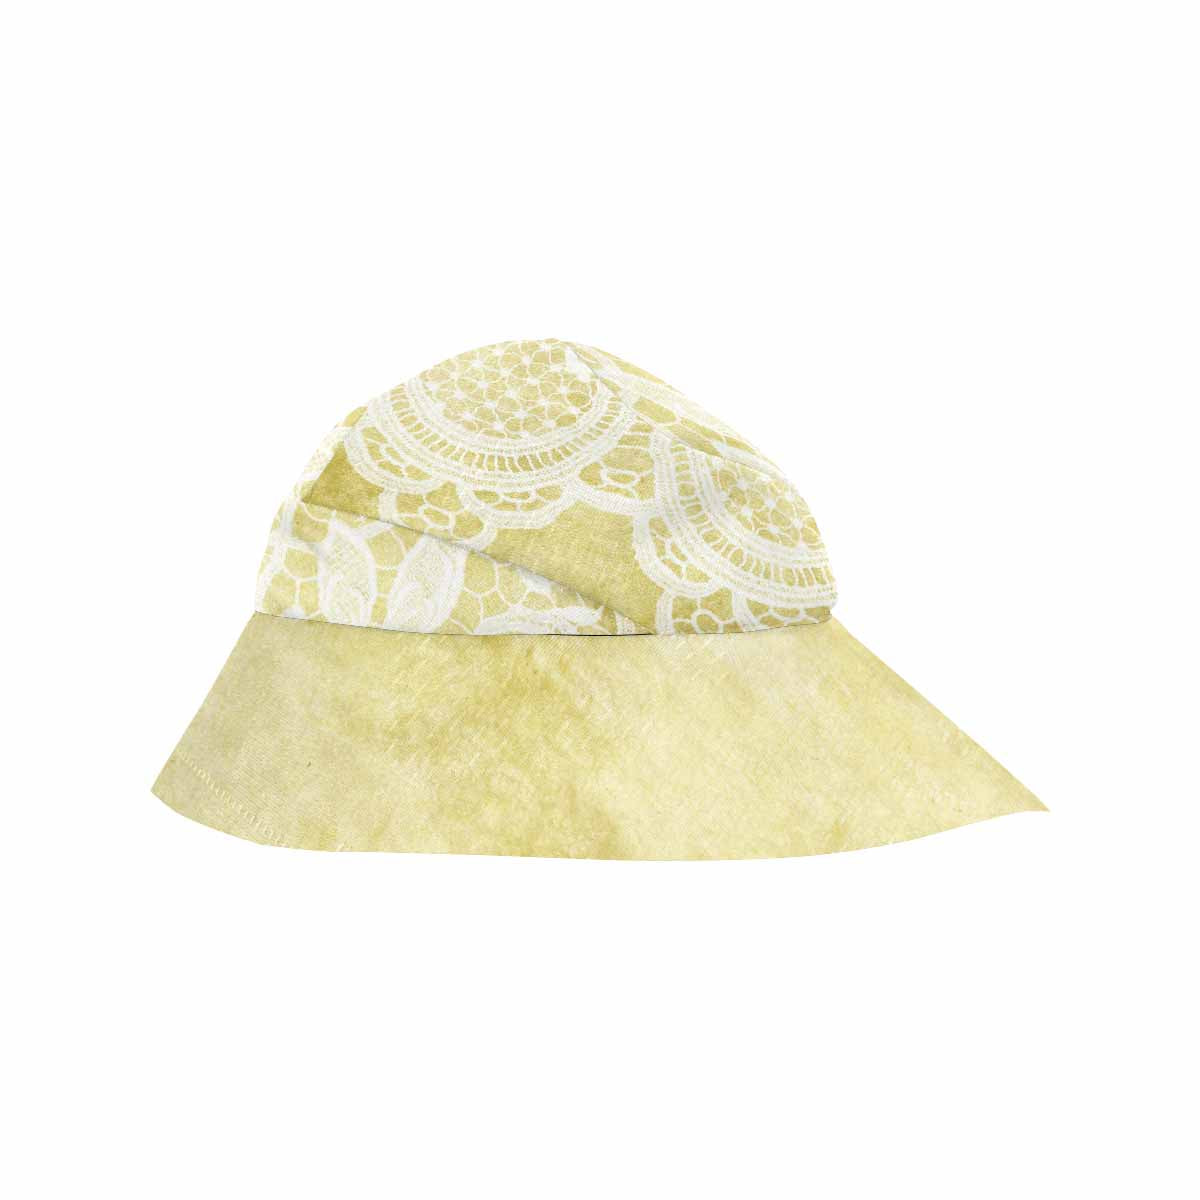 Victorian lace print, wide brim sunvisor Hat, outdoors hat, design 44